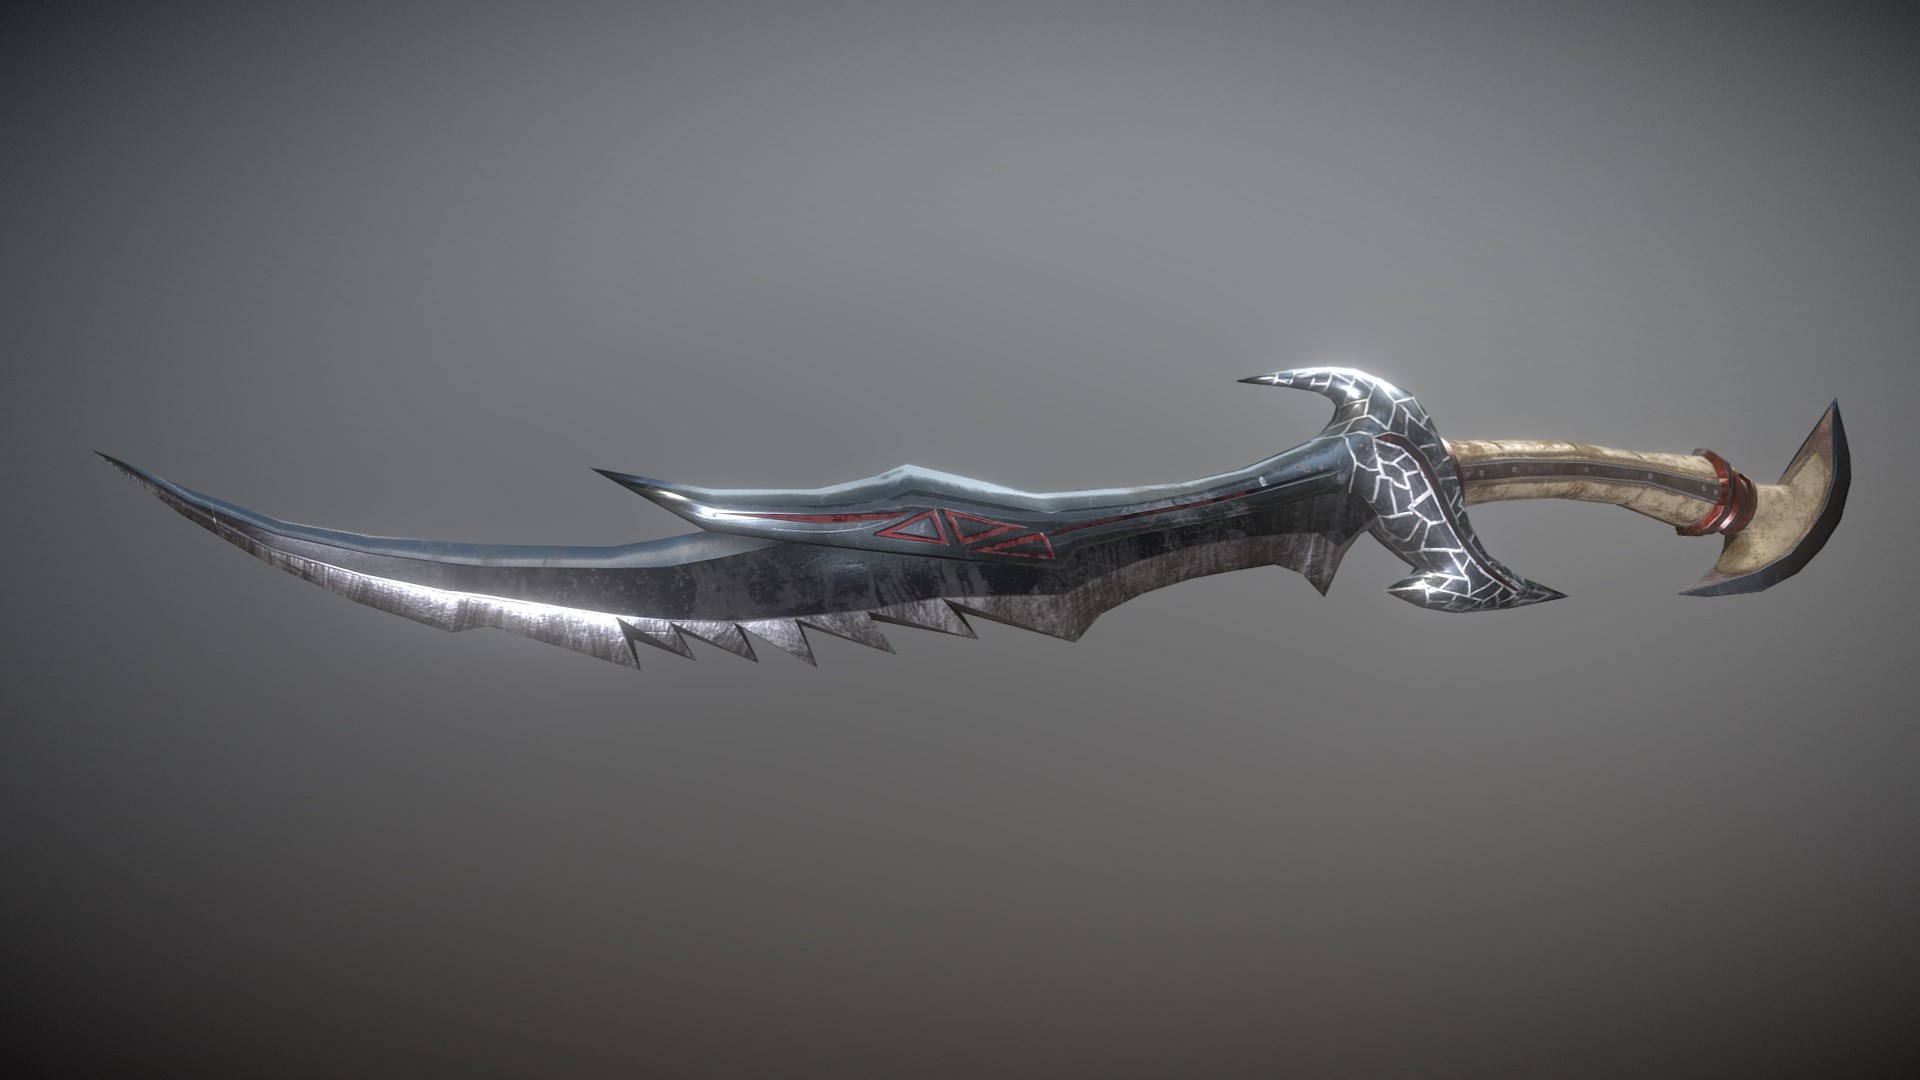 skyrim daedric sword